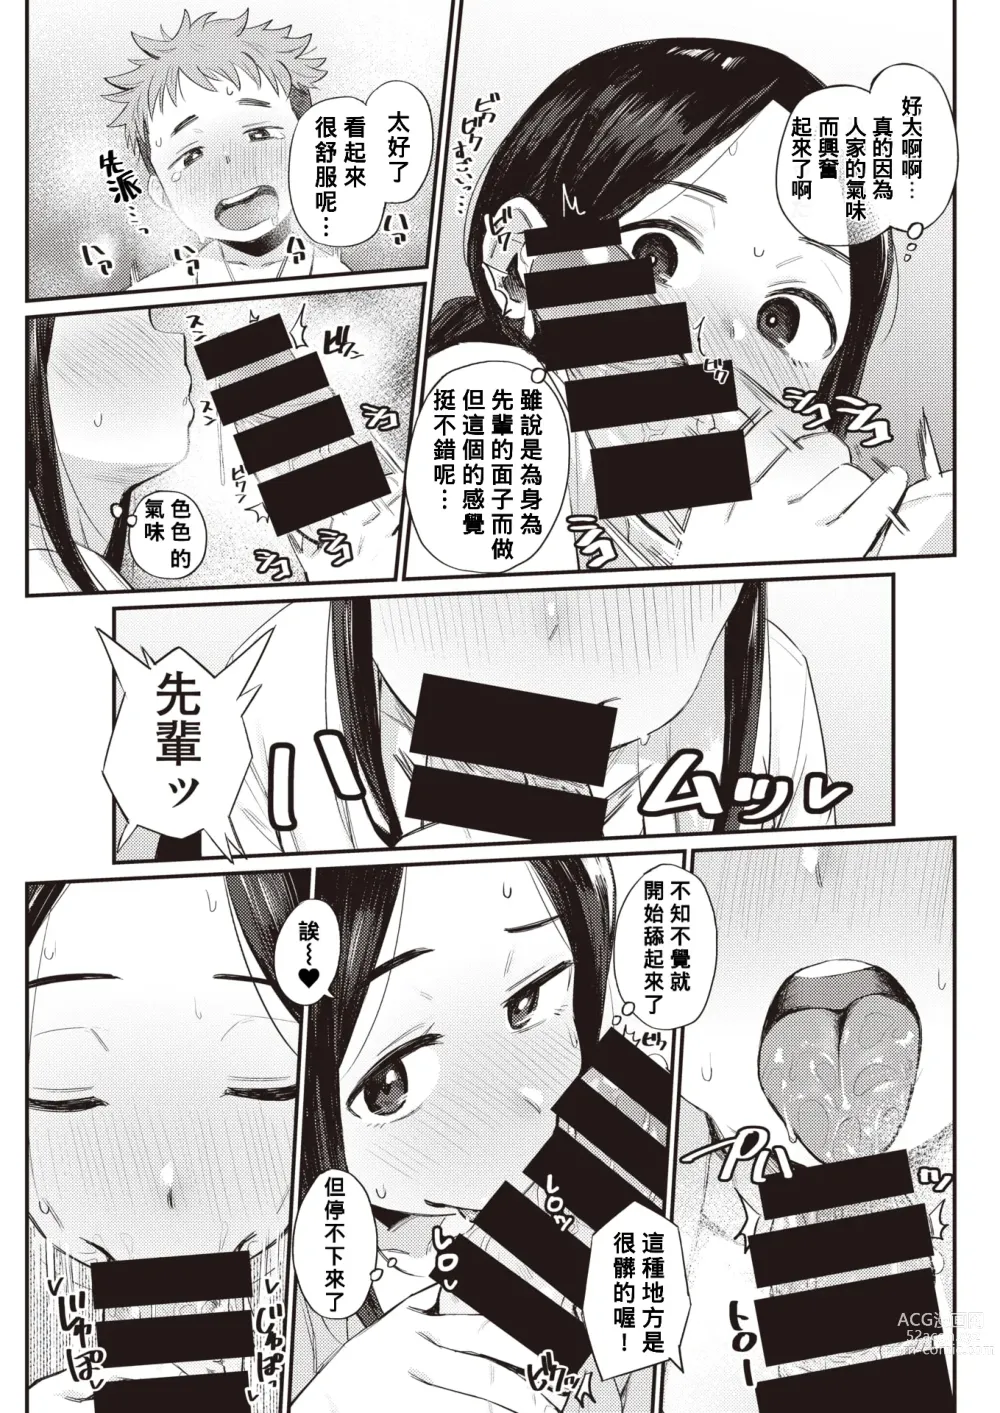 Page 7 of manga Koi no Nioi♡